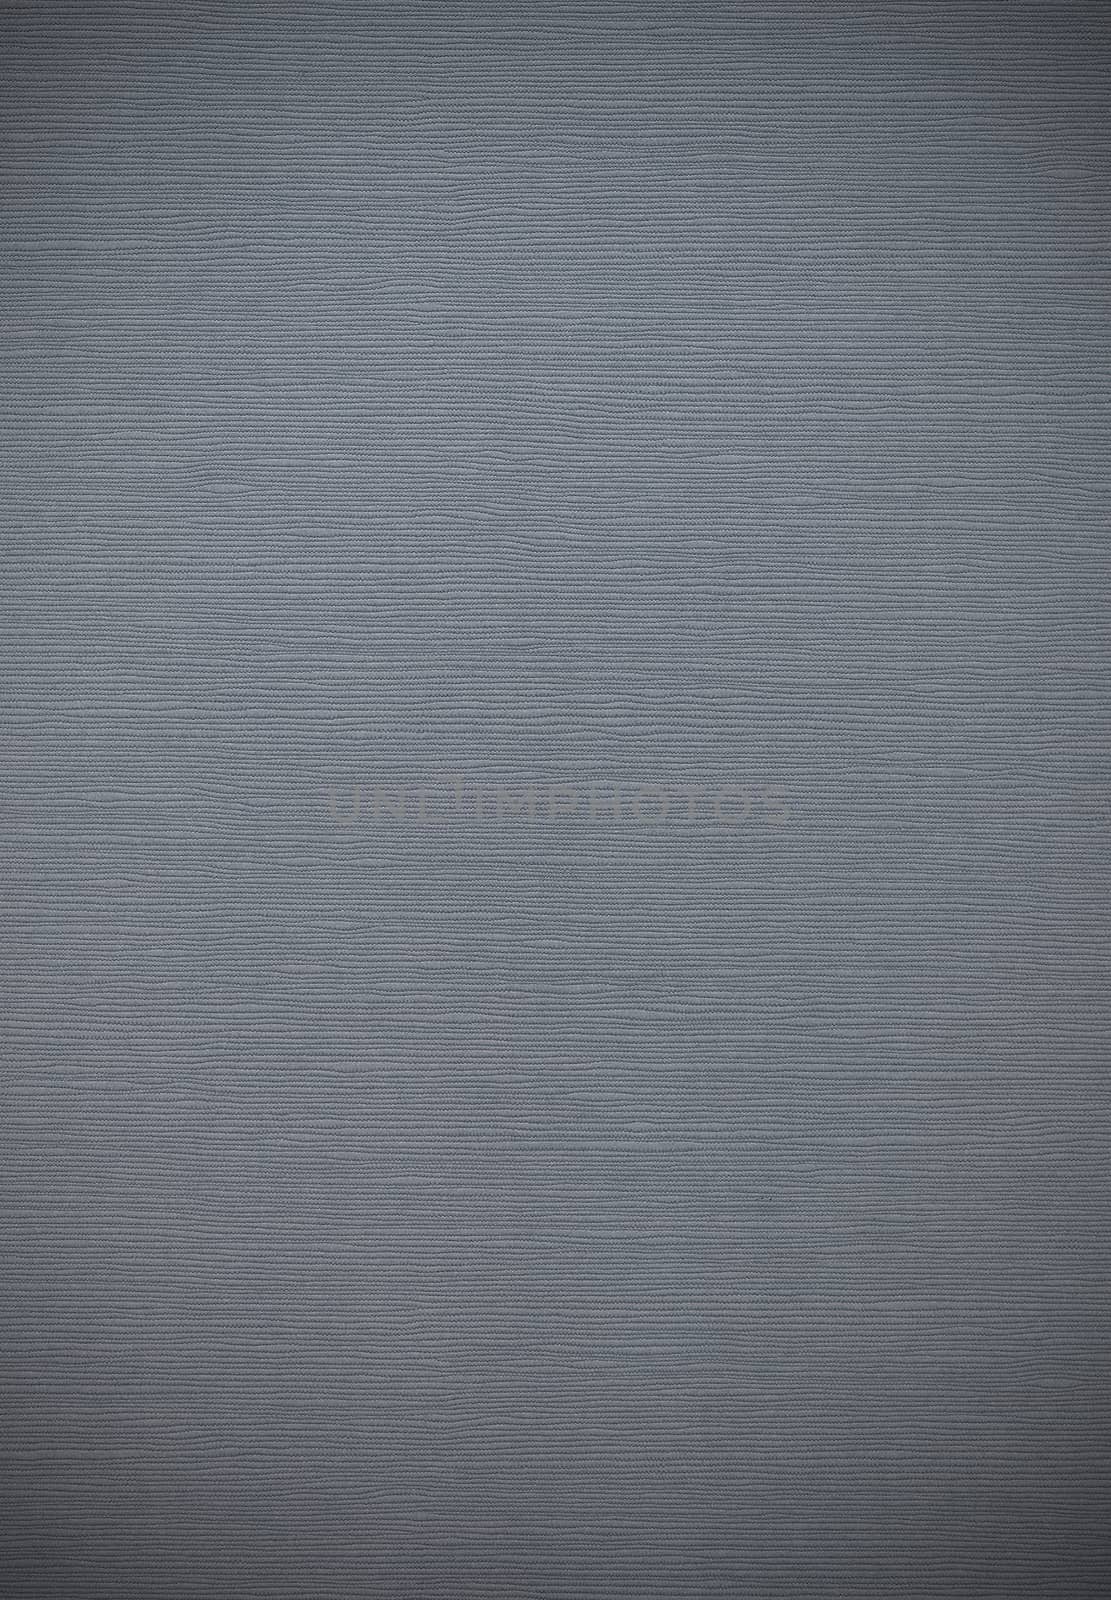 grey cotton textured paper  background - horizontal stripes